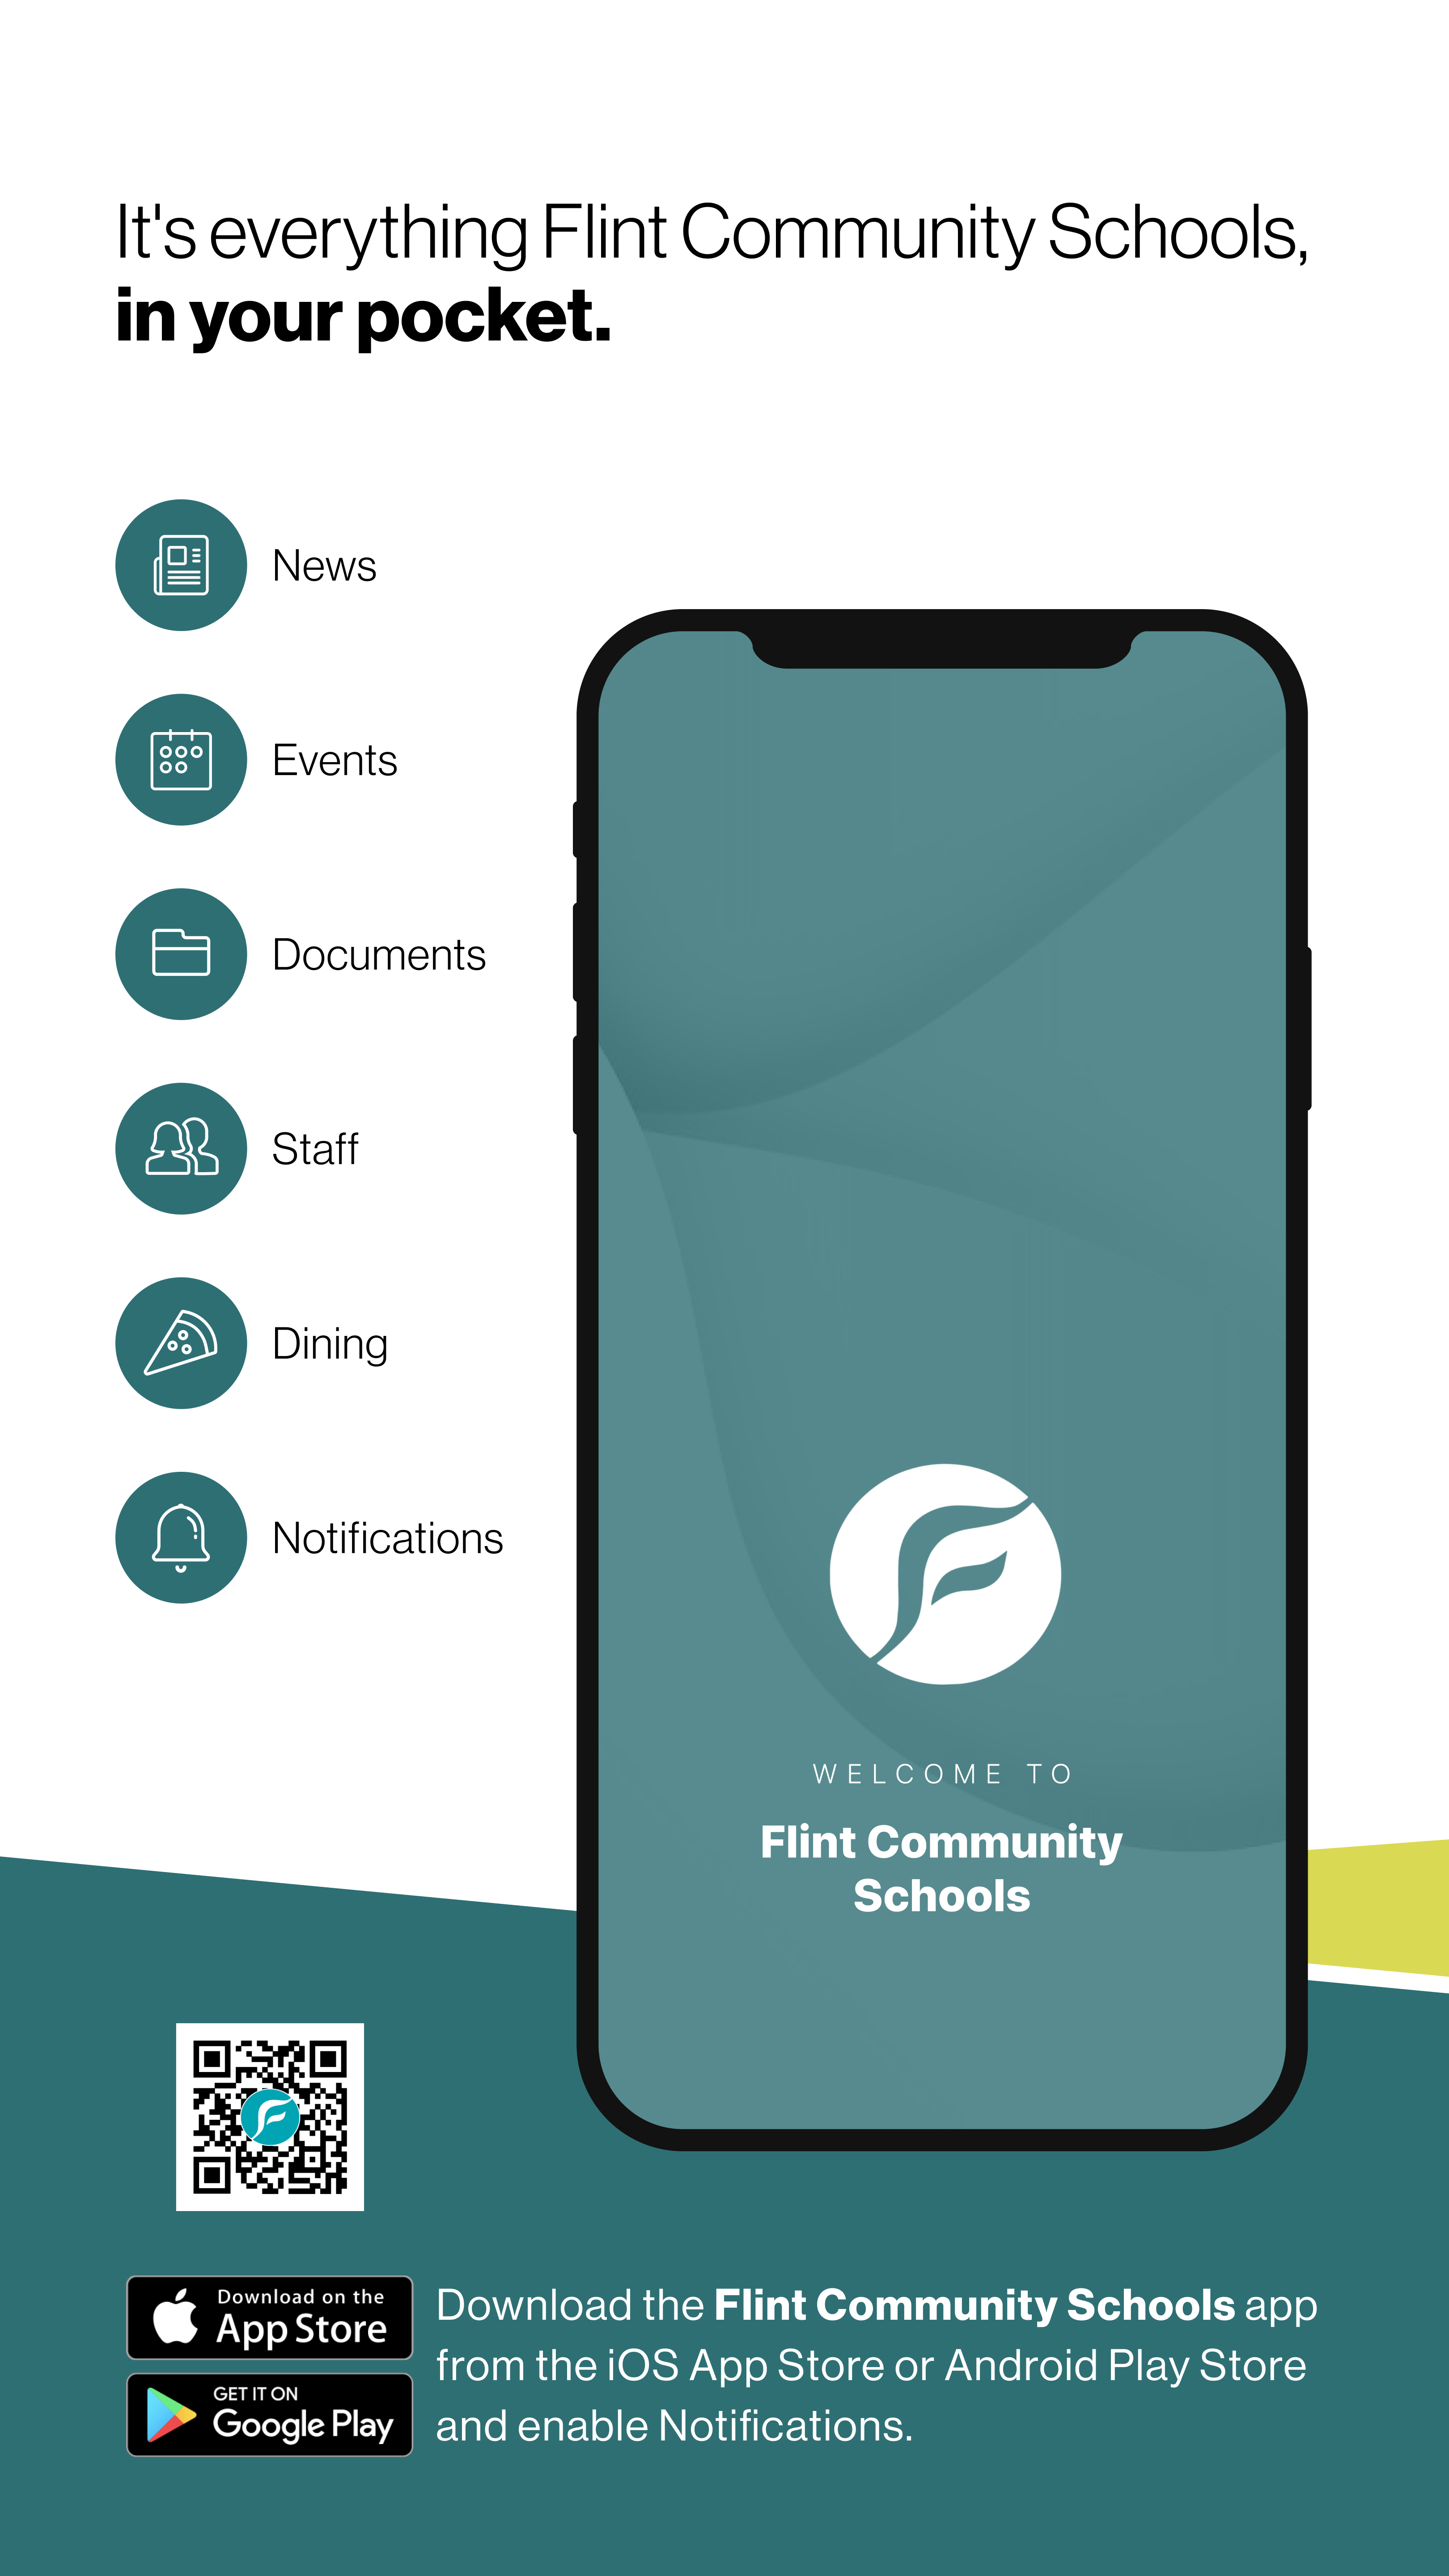 Mobile App Image for Flint Community Schools